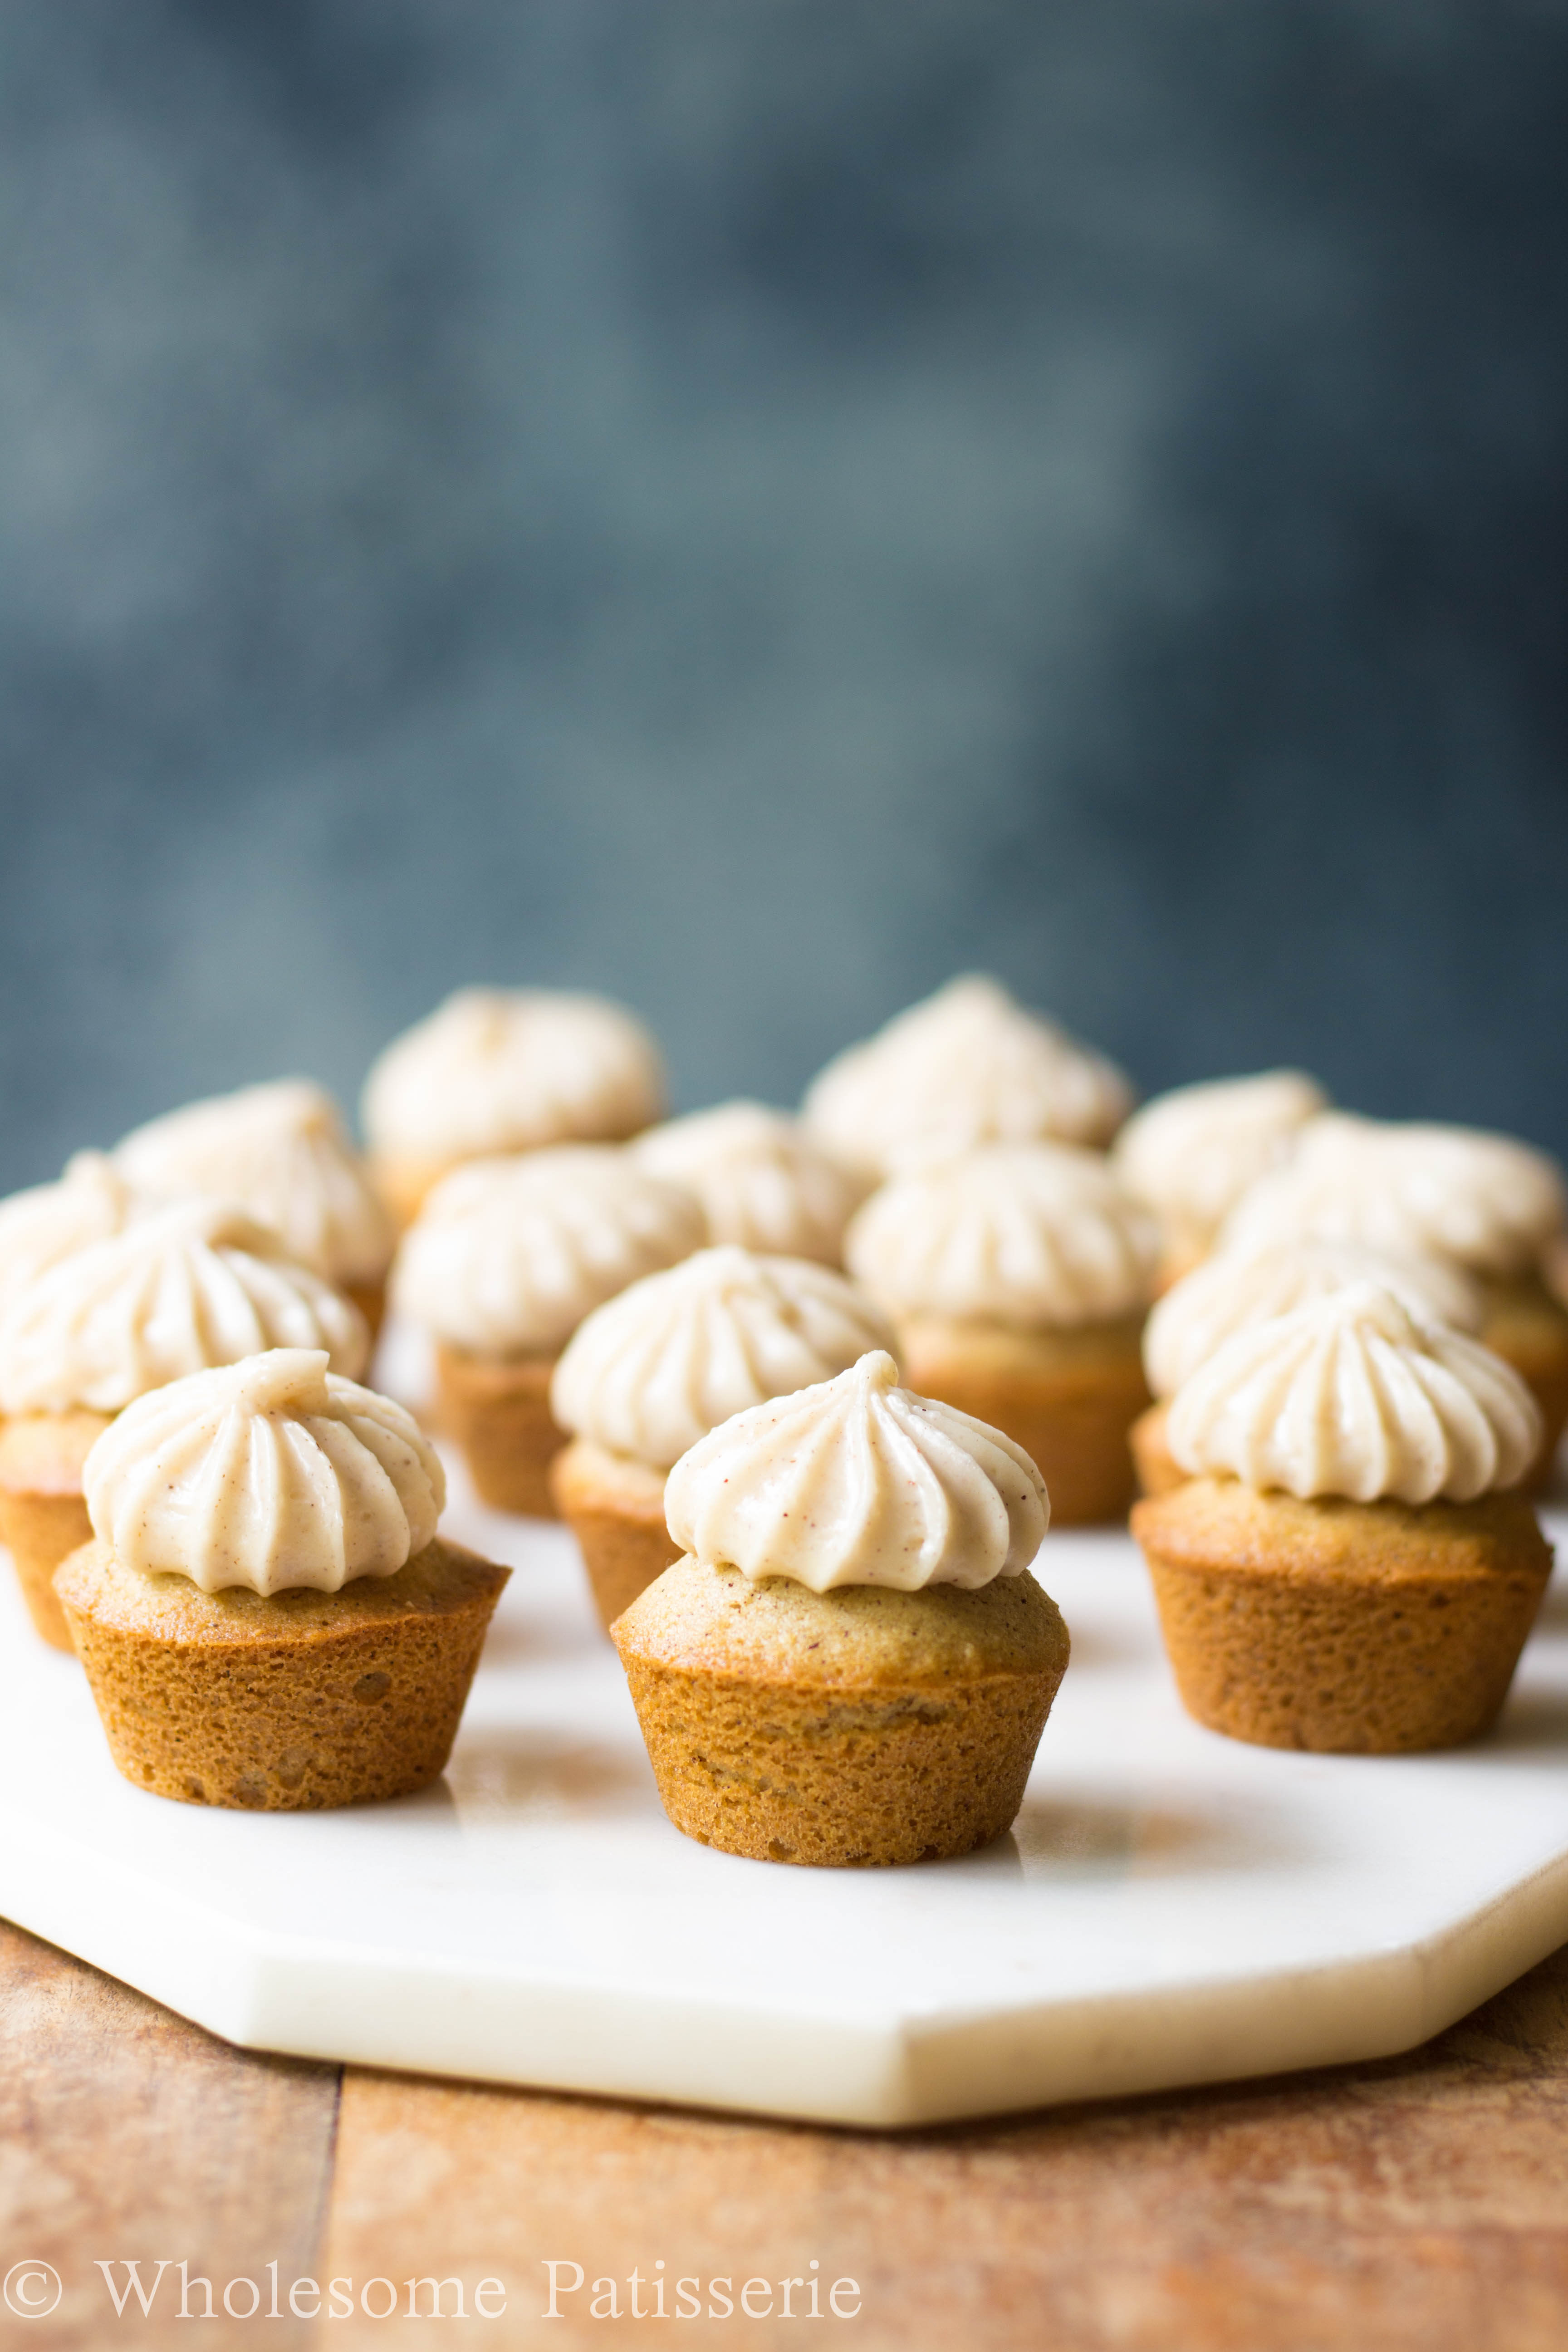 GLUTEN-FREE-cupcake-recipe-honey-cupcakes-vegetarian-DELICIOUS-easy-yummy-cupcakes-cinnamon-mini-cupcakes-wholesome-patisserie-baking